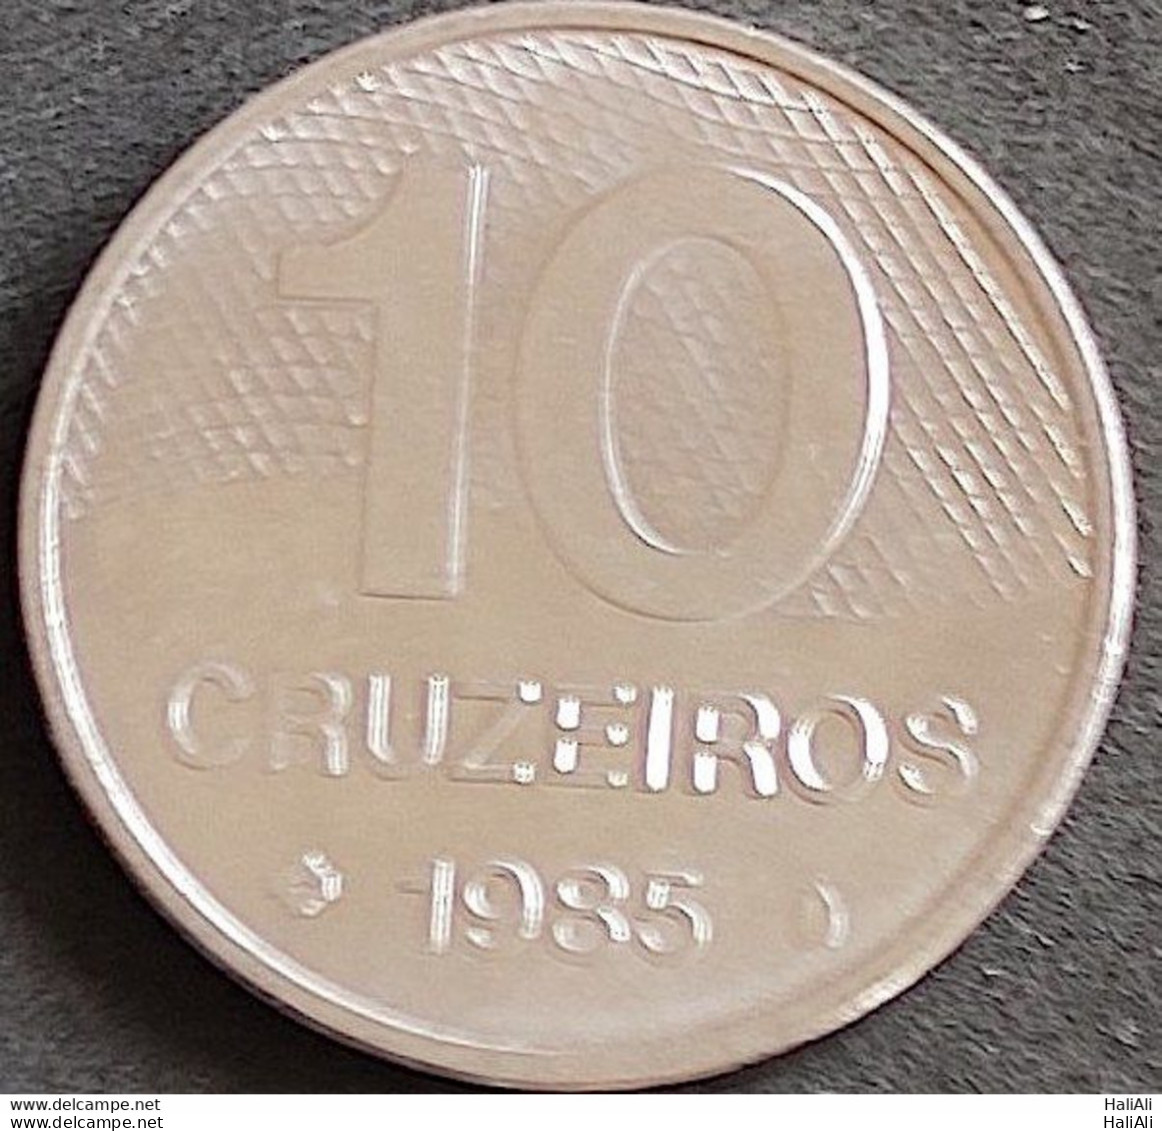 Coin Brazil Moeda Brasil 1985 10 Cruzeiros 1 - Brazil